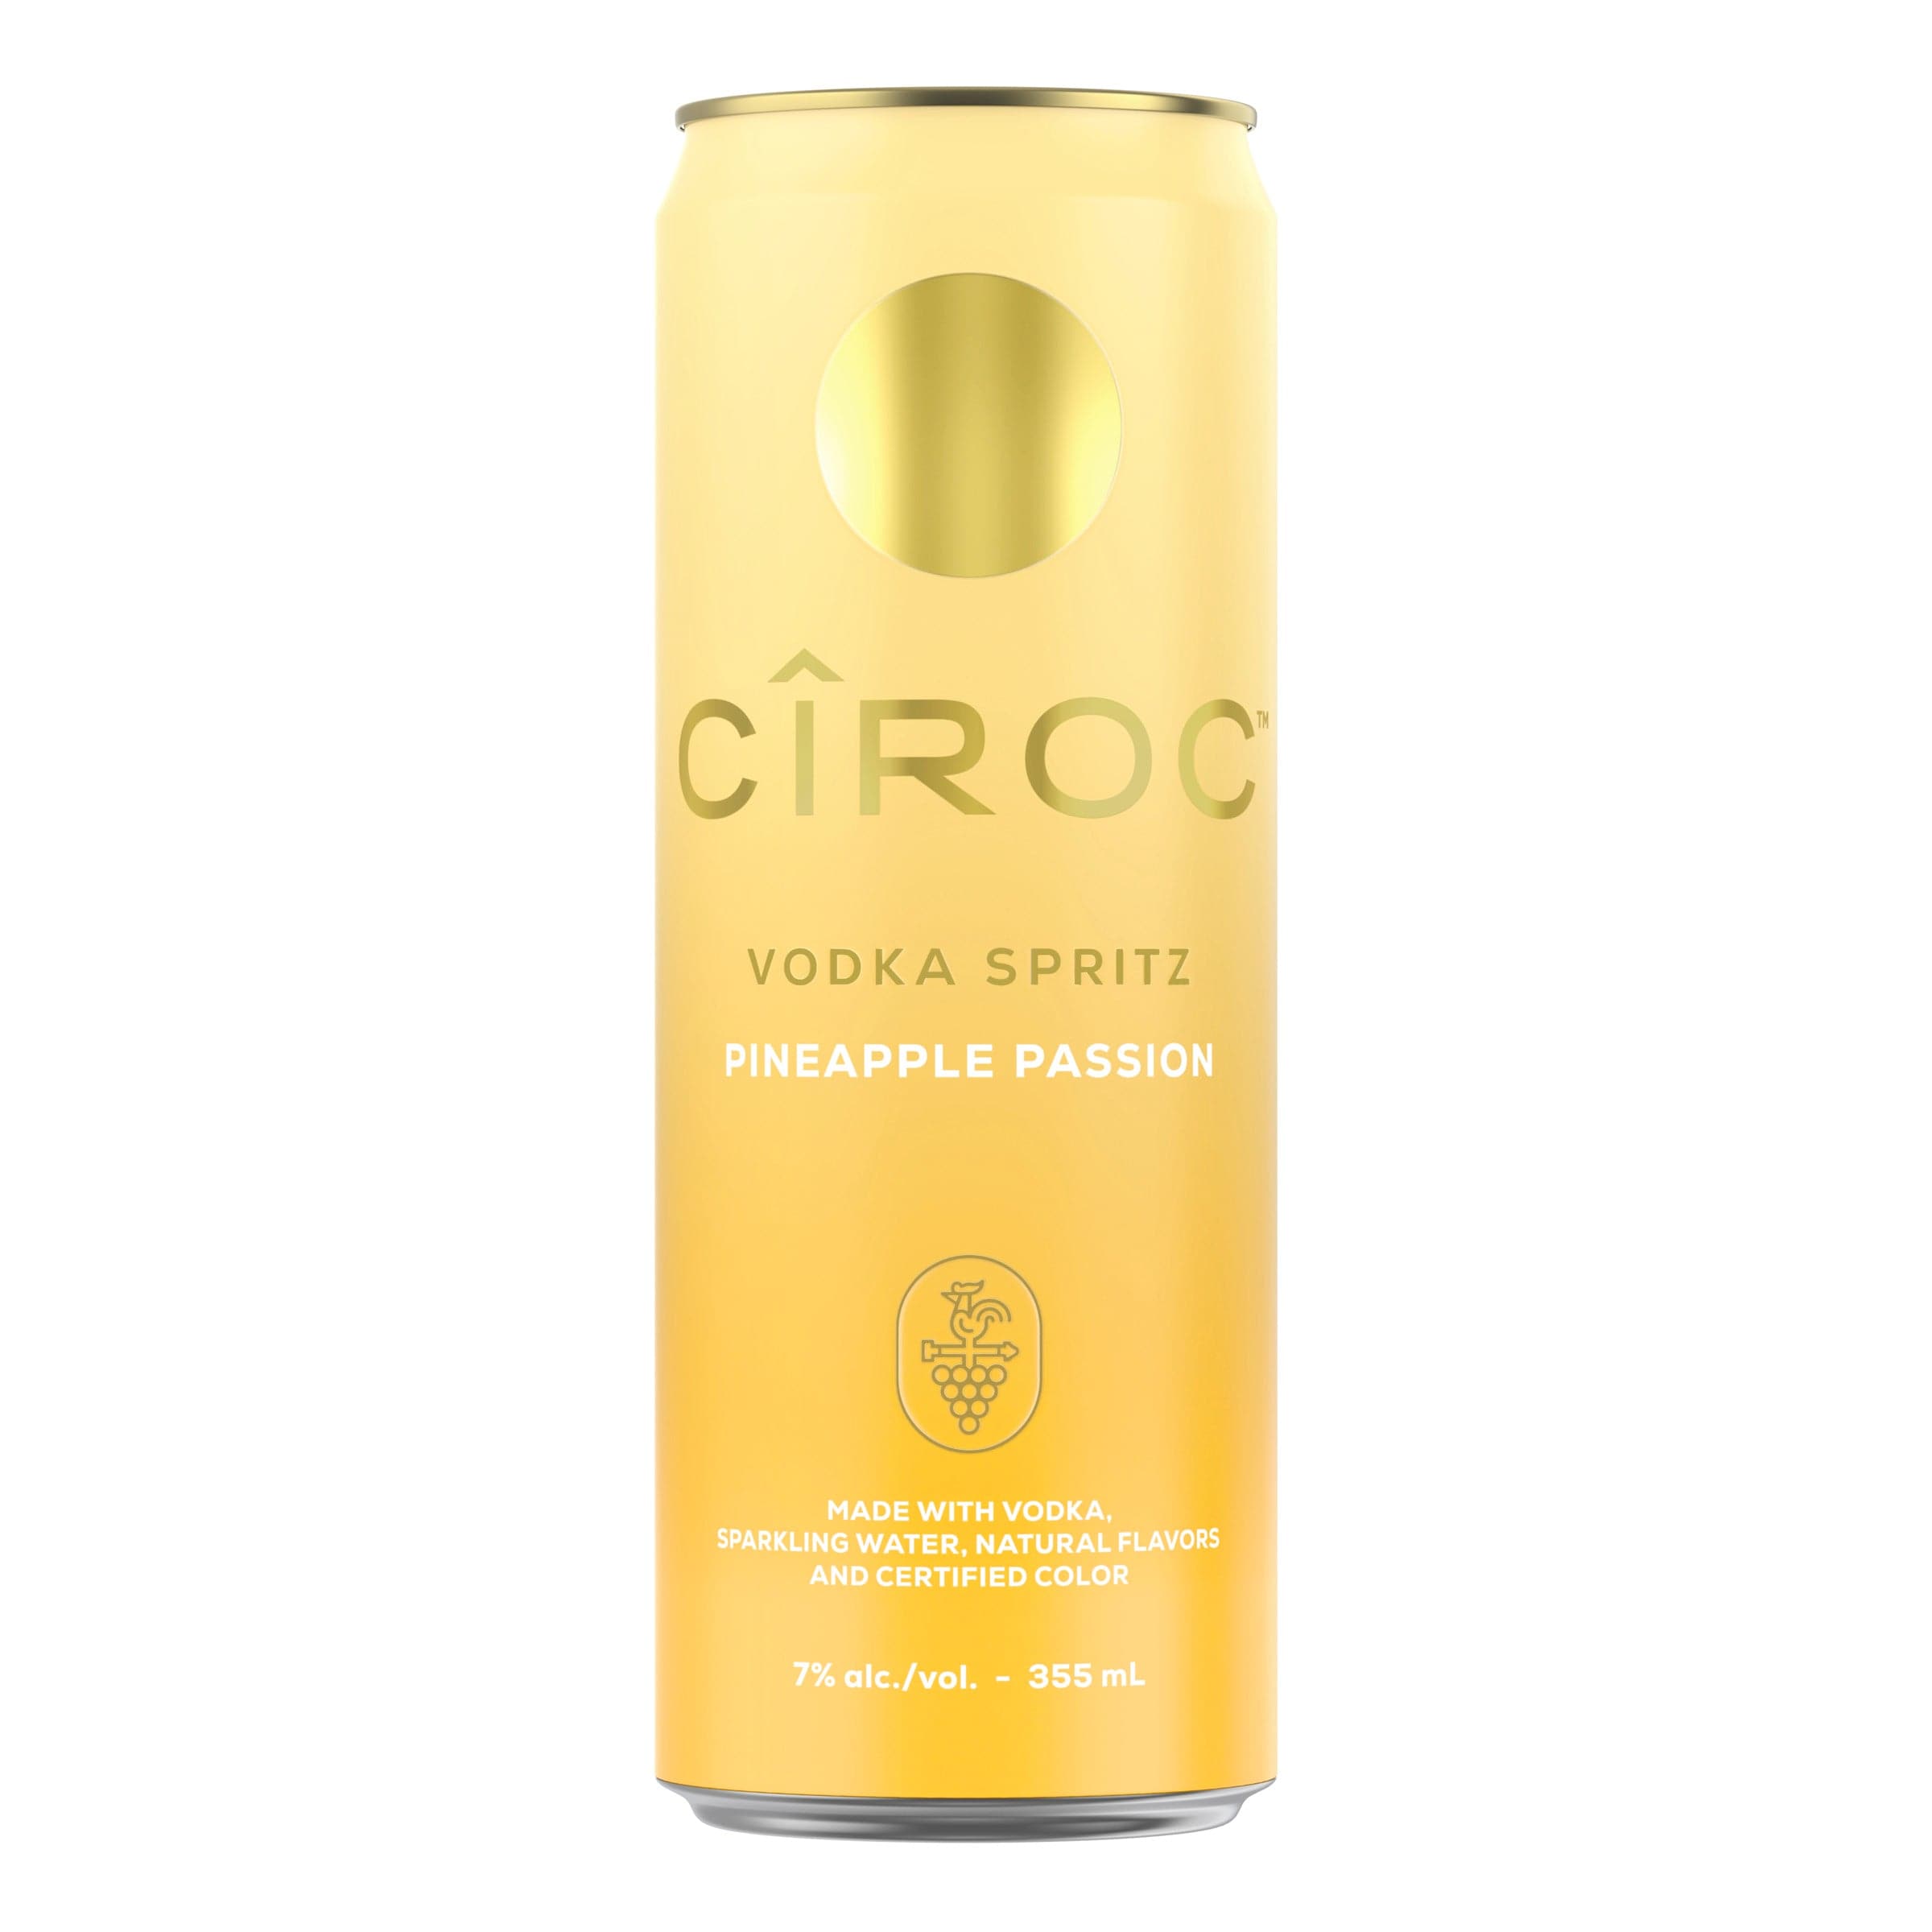 Ciroc Vodka Pineapple Passion Spritz 4x 355ml Cans - Barbank